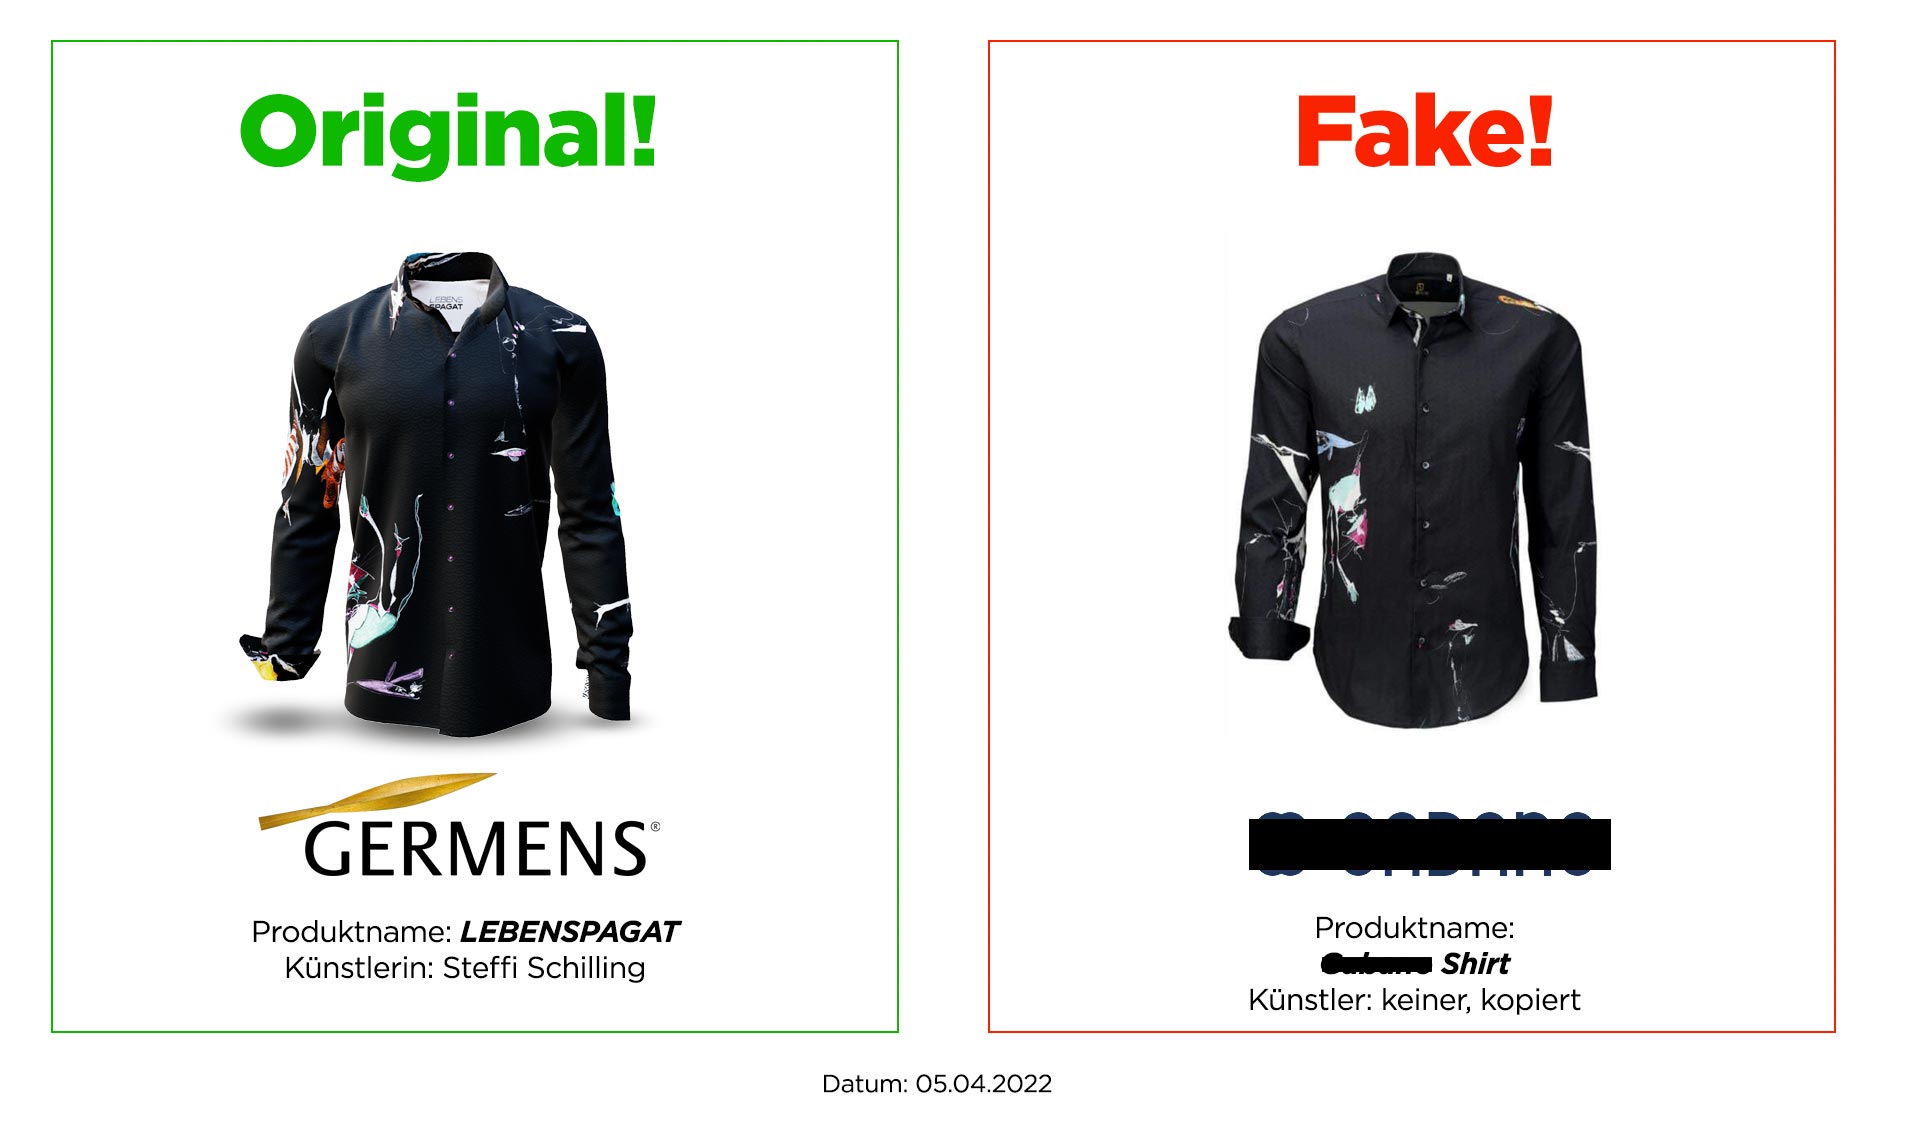 Original GERMENS® shirt LEBENSSPAGAT and plagiarism